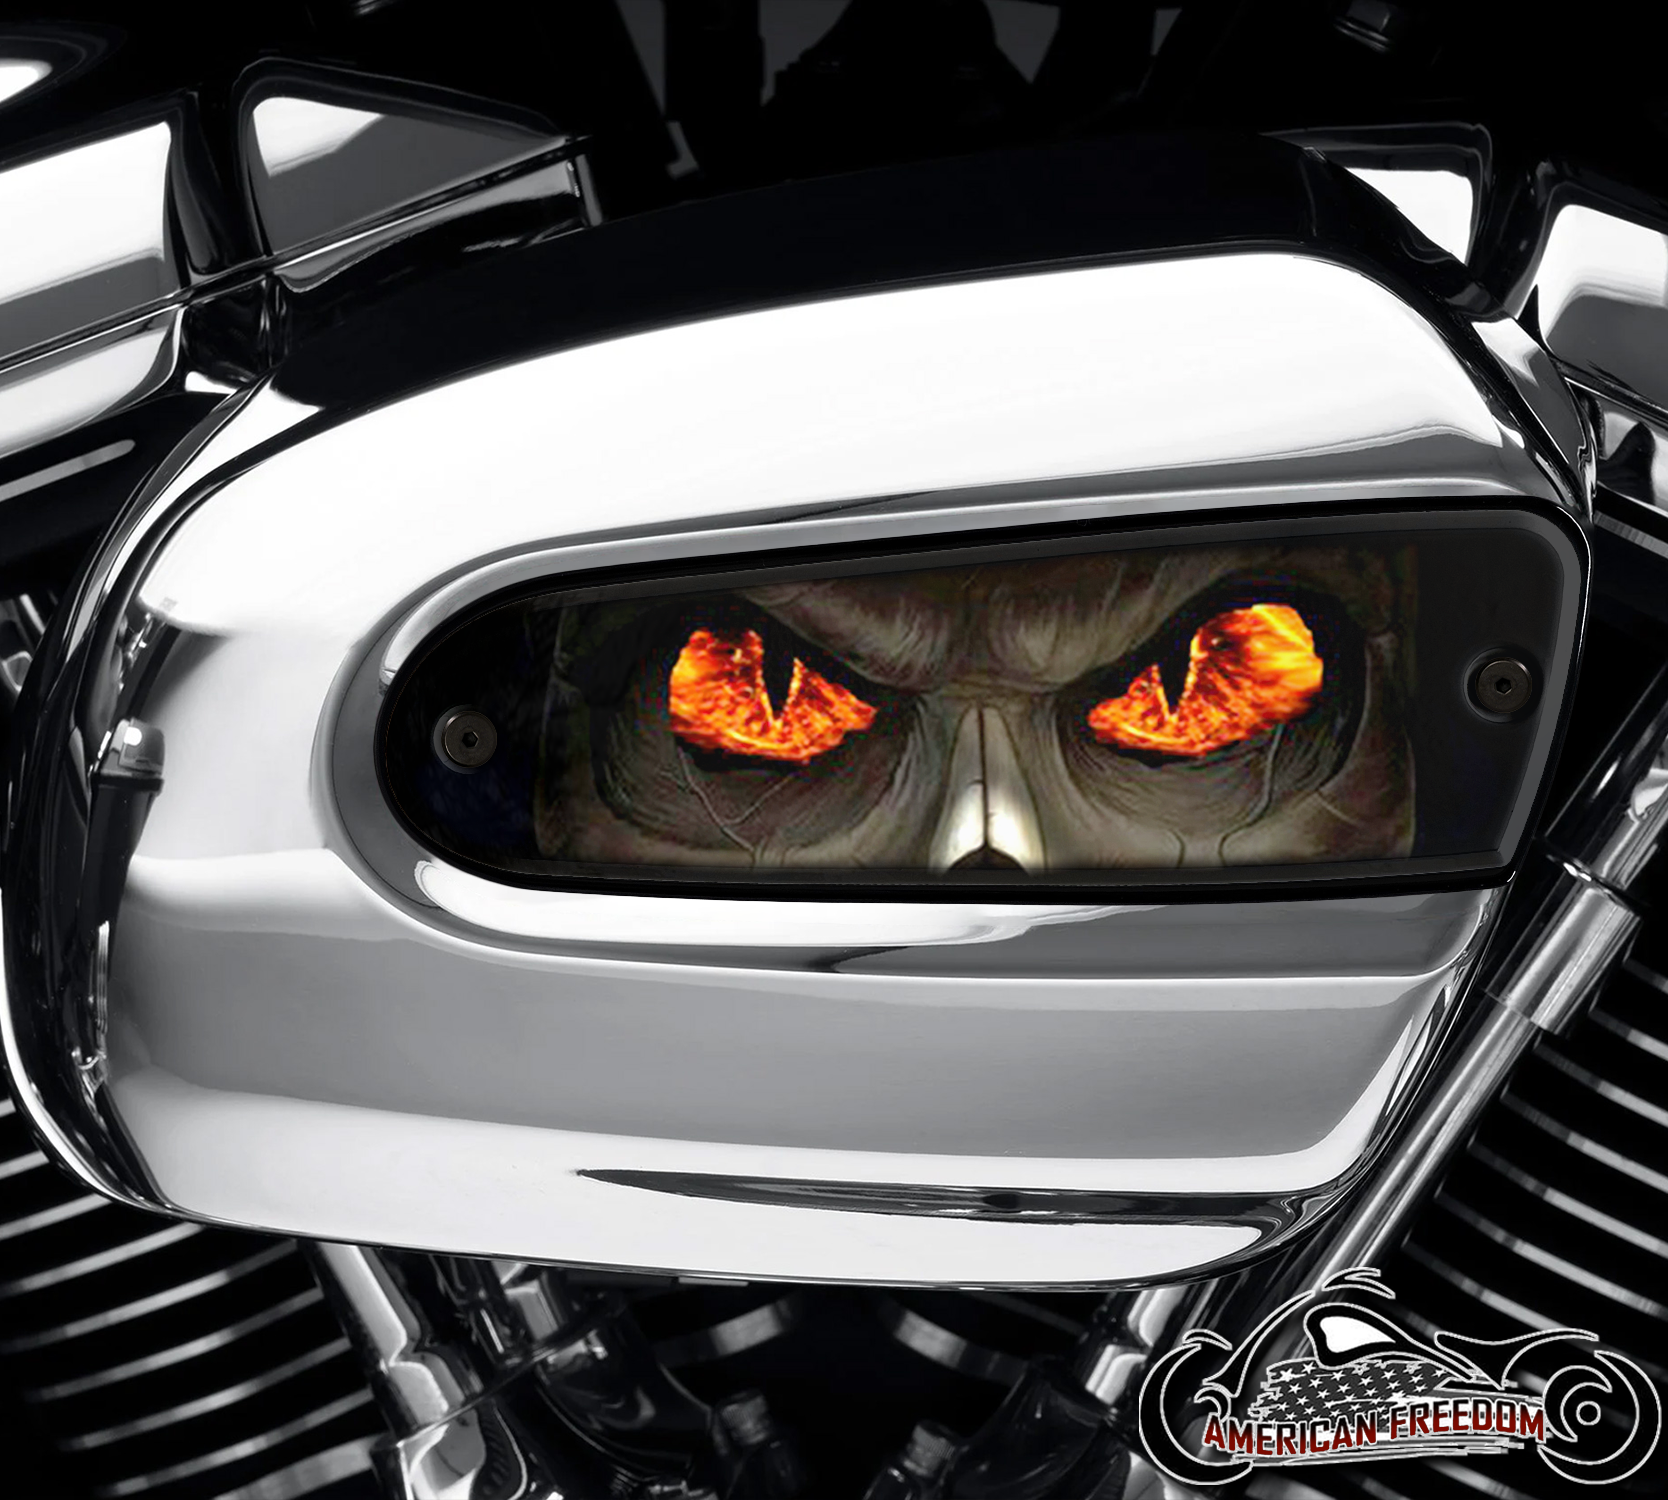 Harley Davidson Wedge Air Cleaner Insert - Fire Eyed Reaper